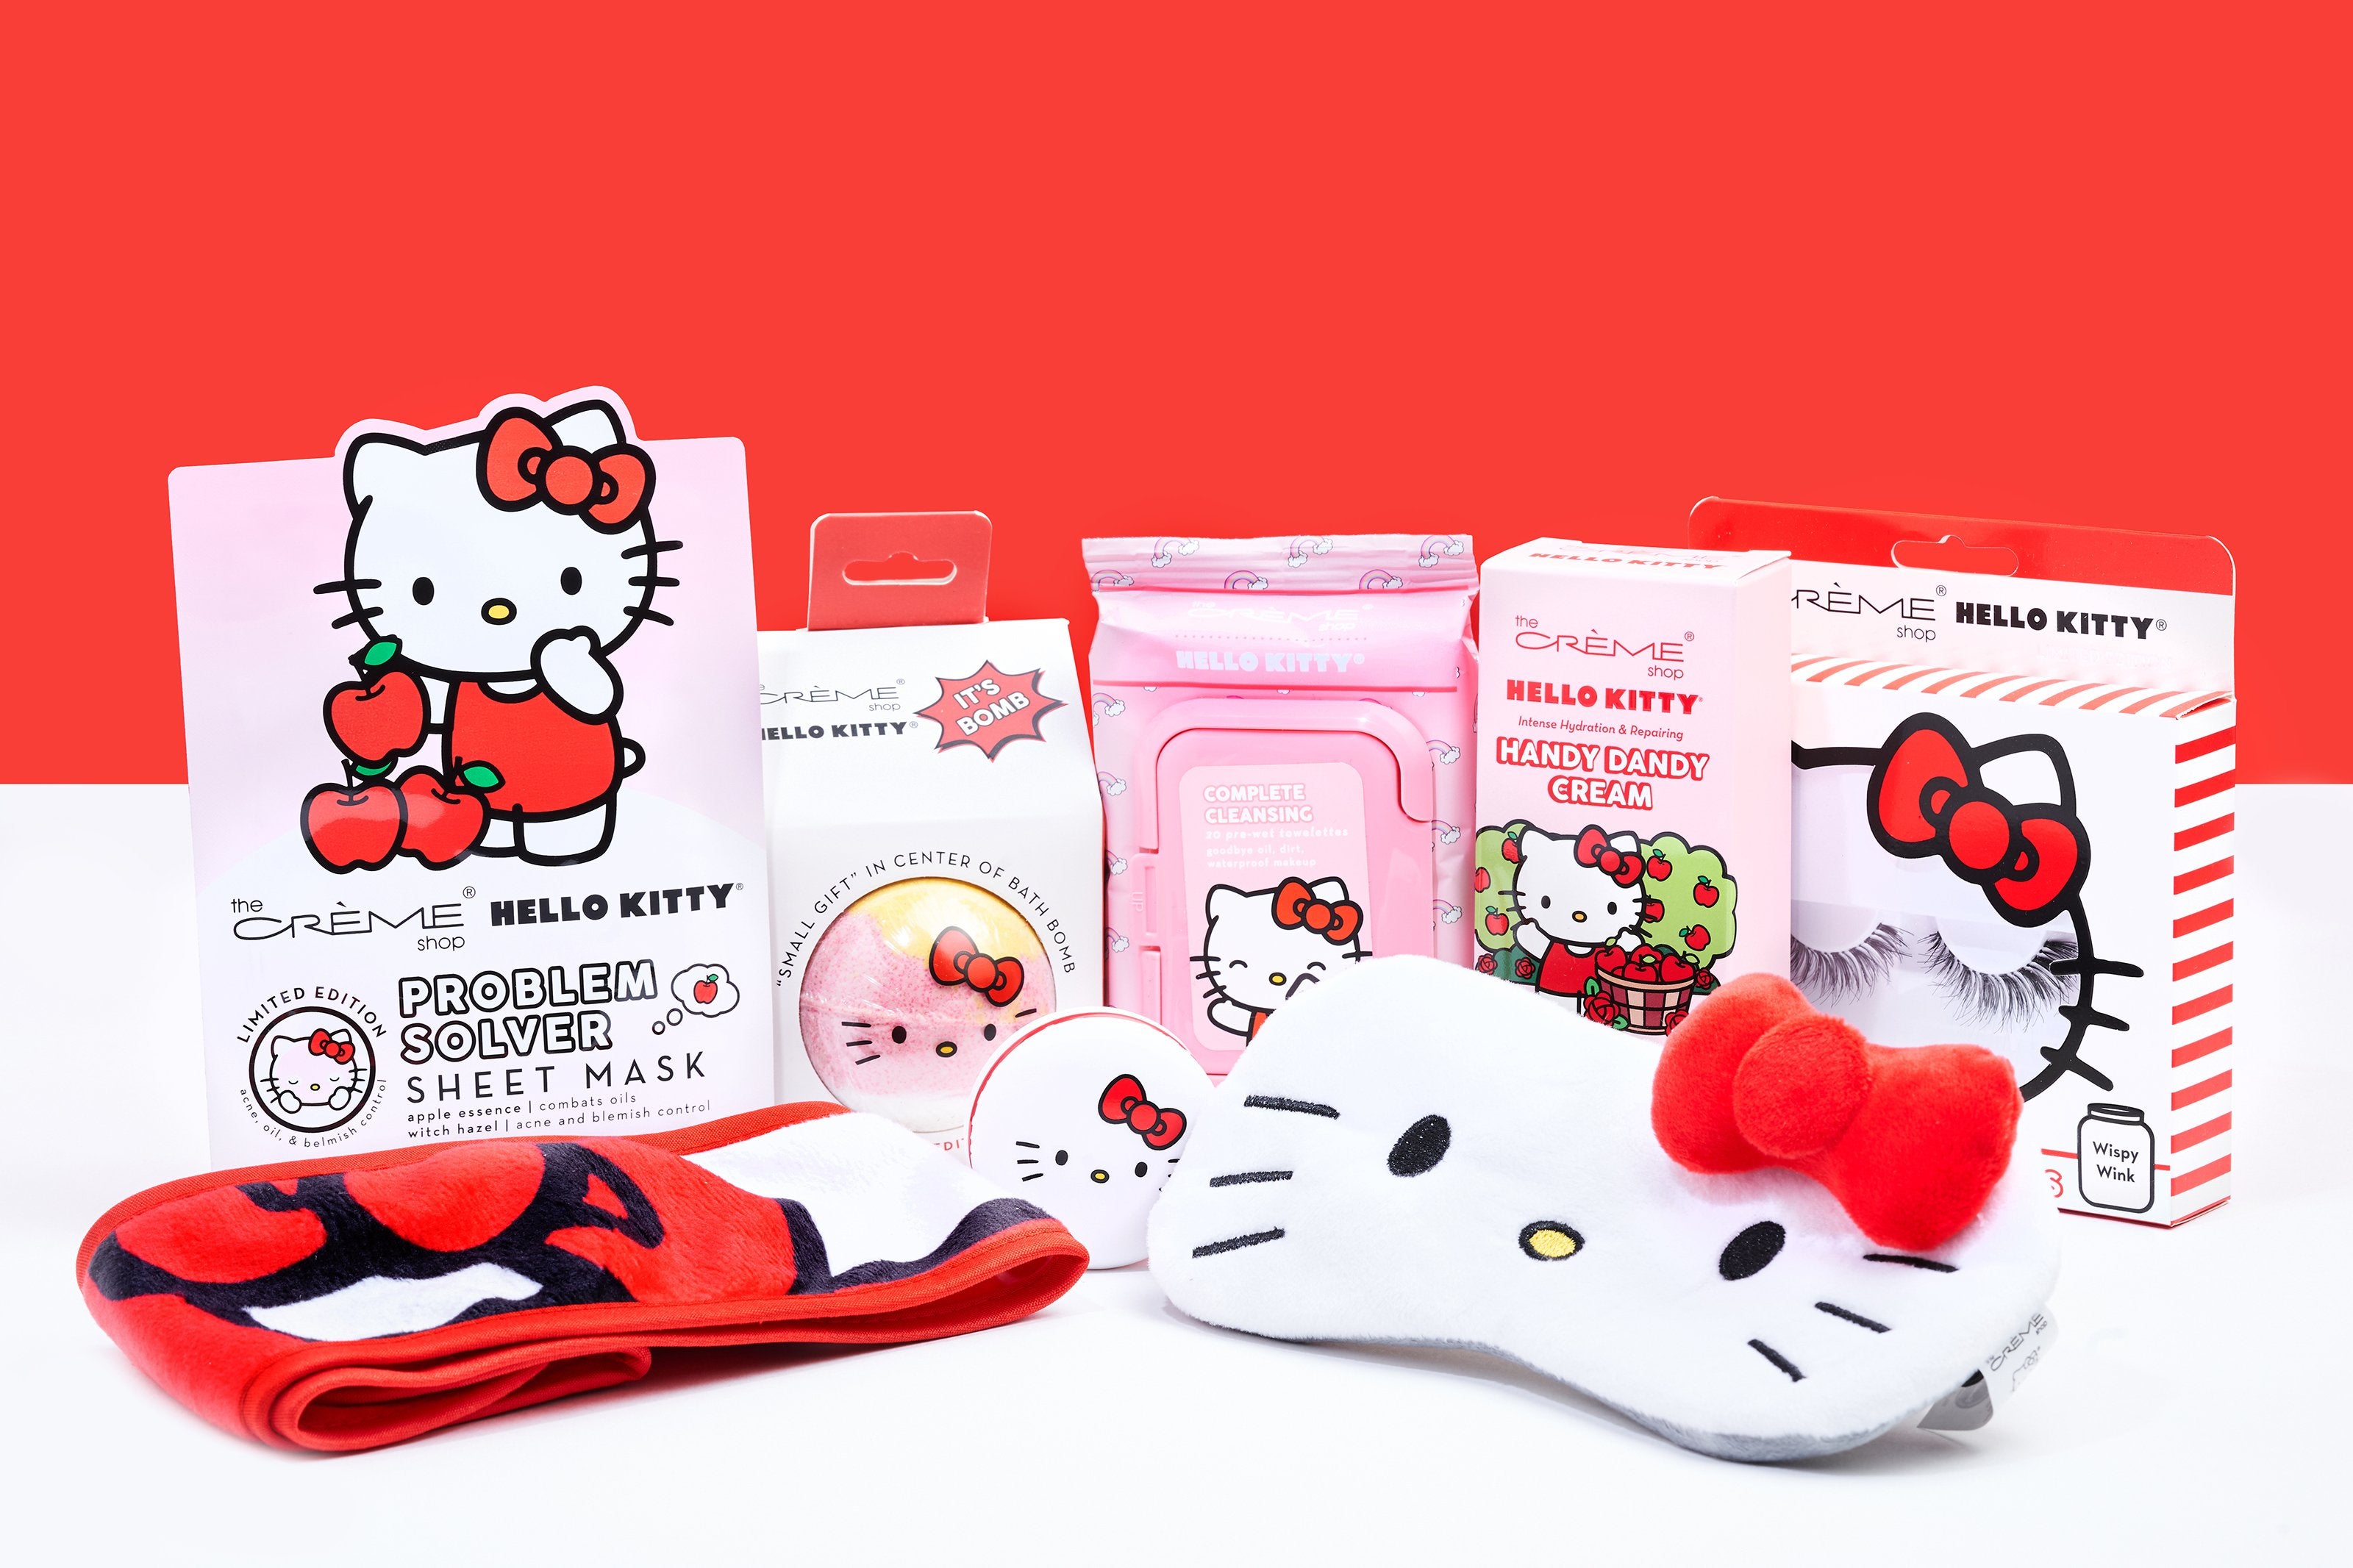 Hello Kitty – The Crème Shop